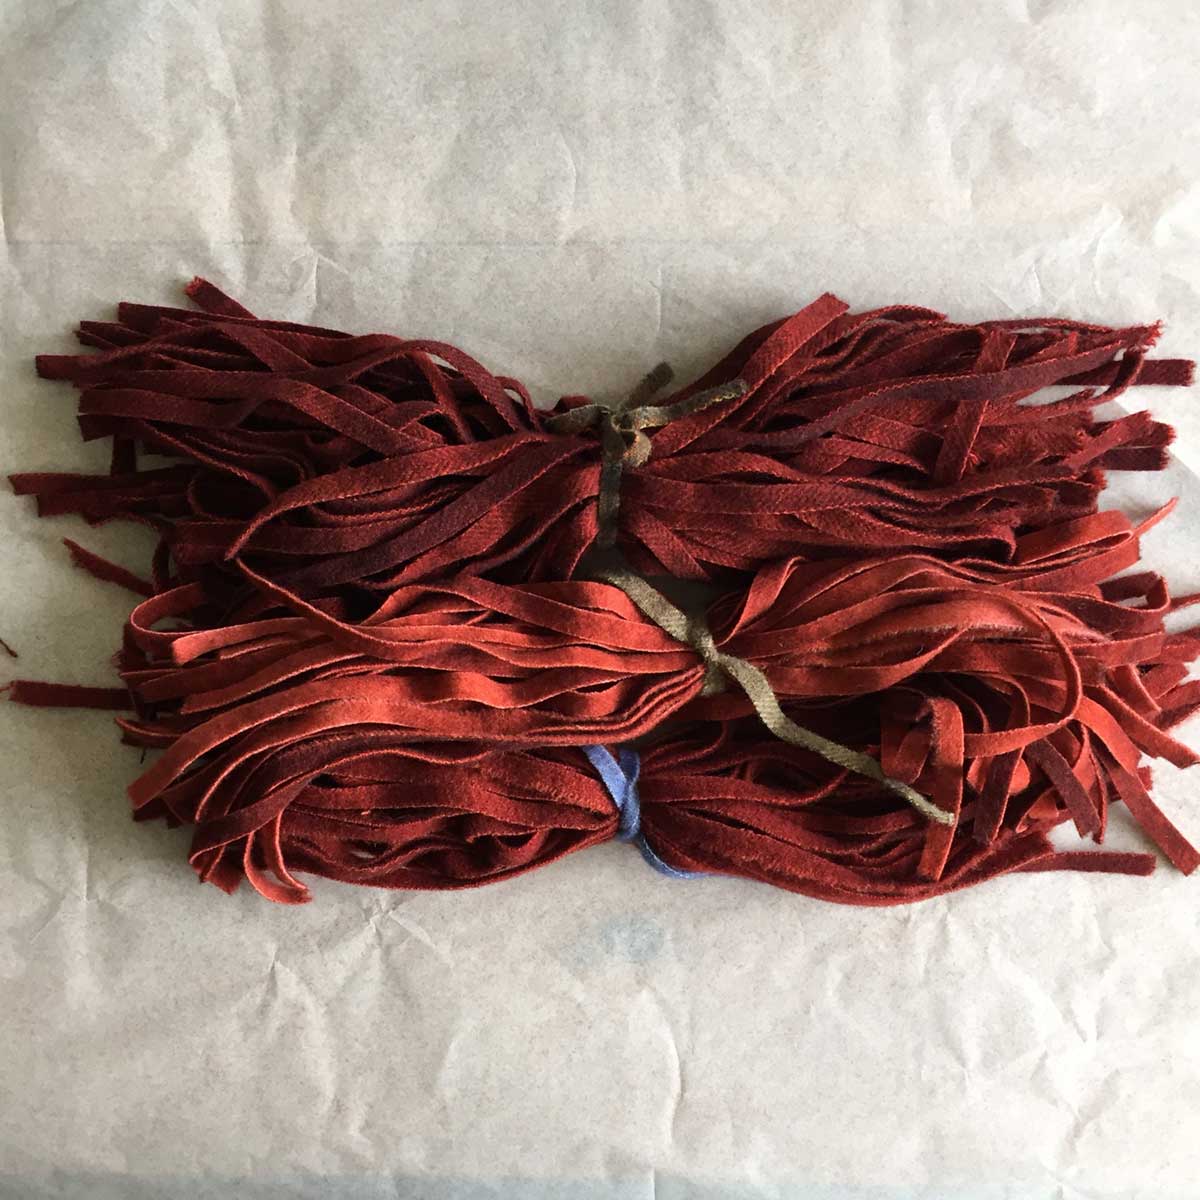 bundles of dark red wool strips for making a hooked rug